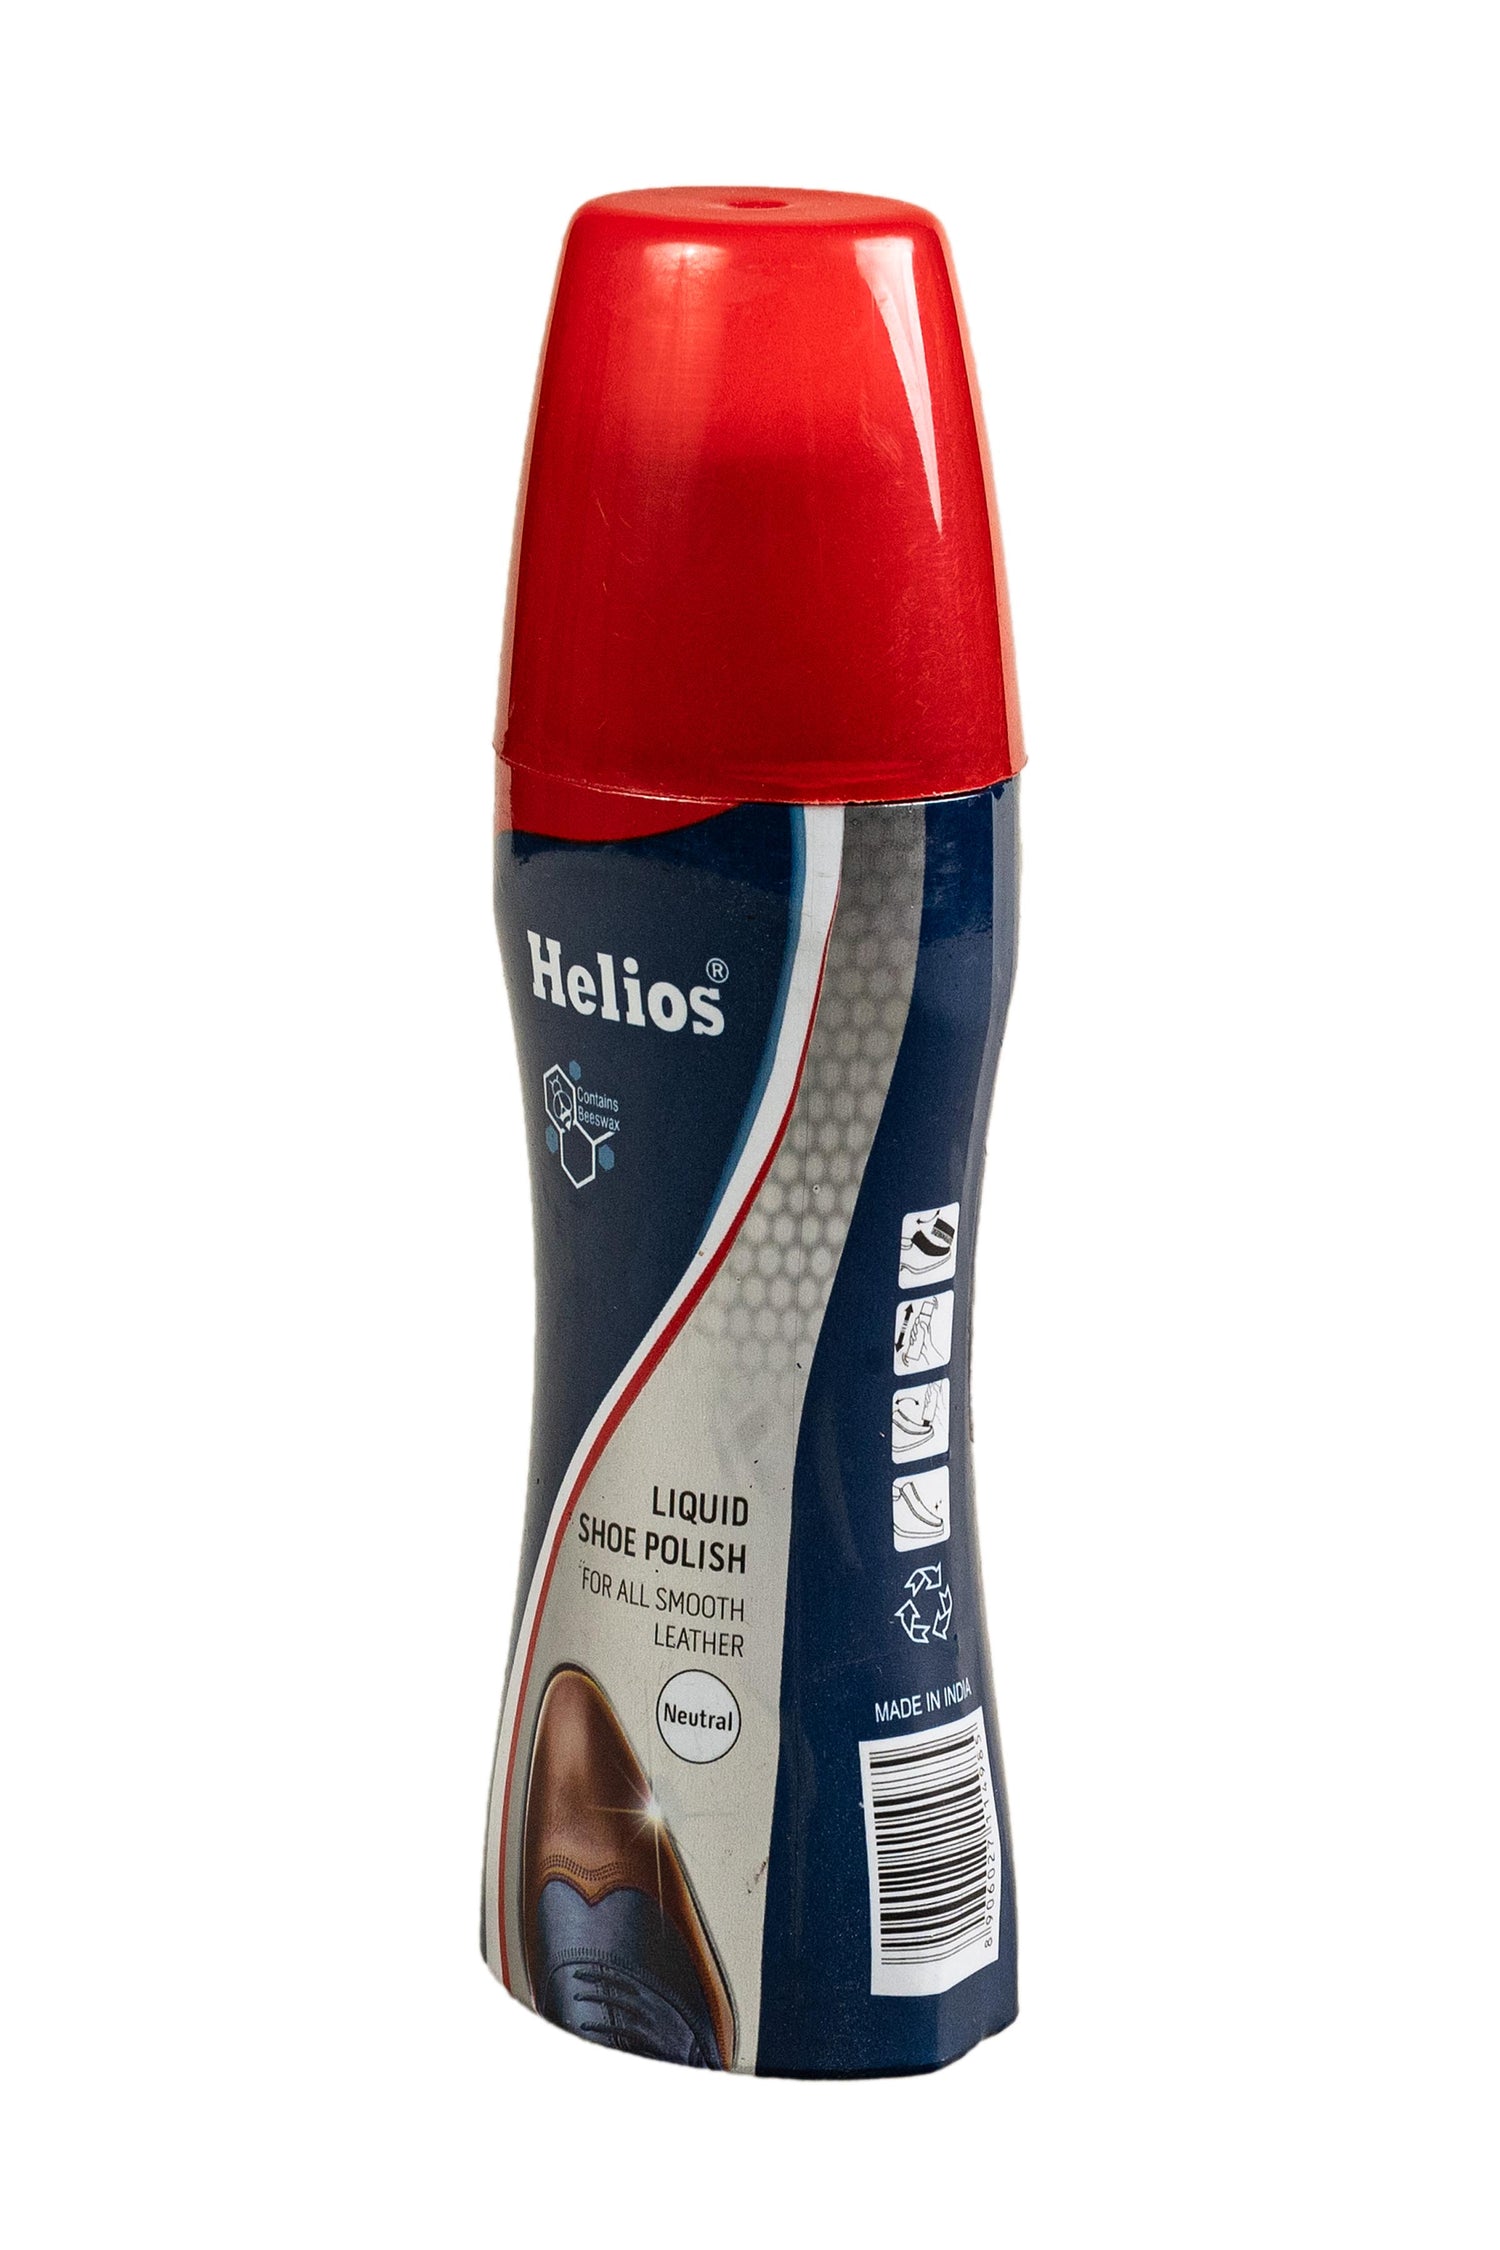 Helios Natural Liquid Shoe Polish